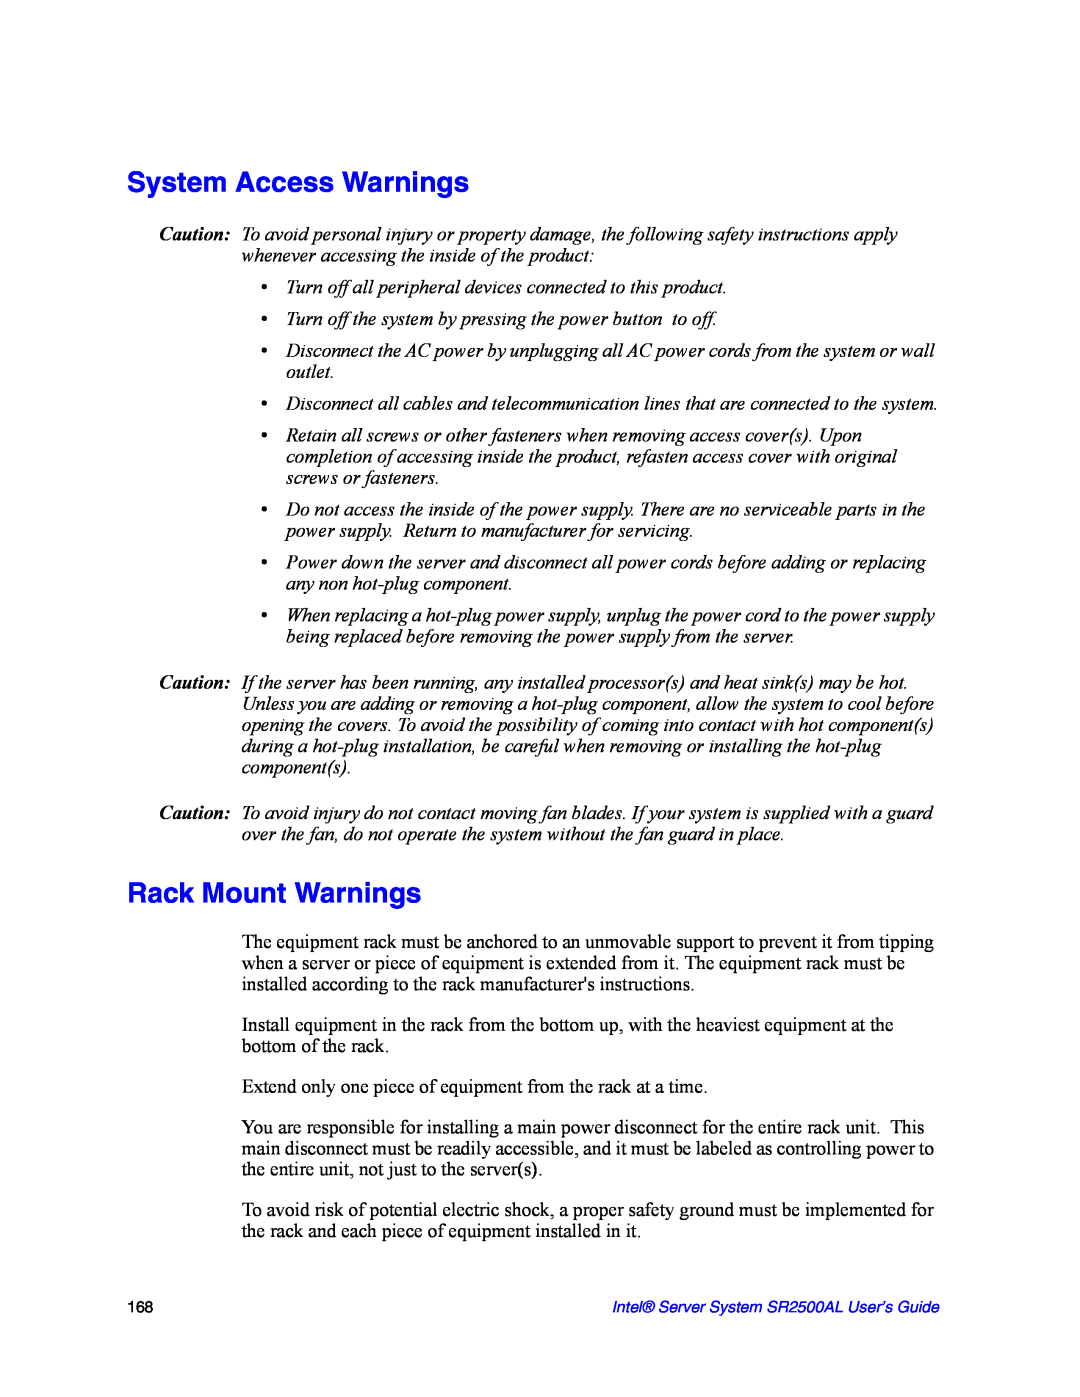 Intel SR2500AL manual System Access Warnings, Rack Mount Warnings 